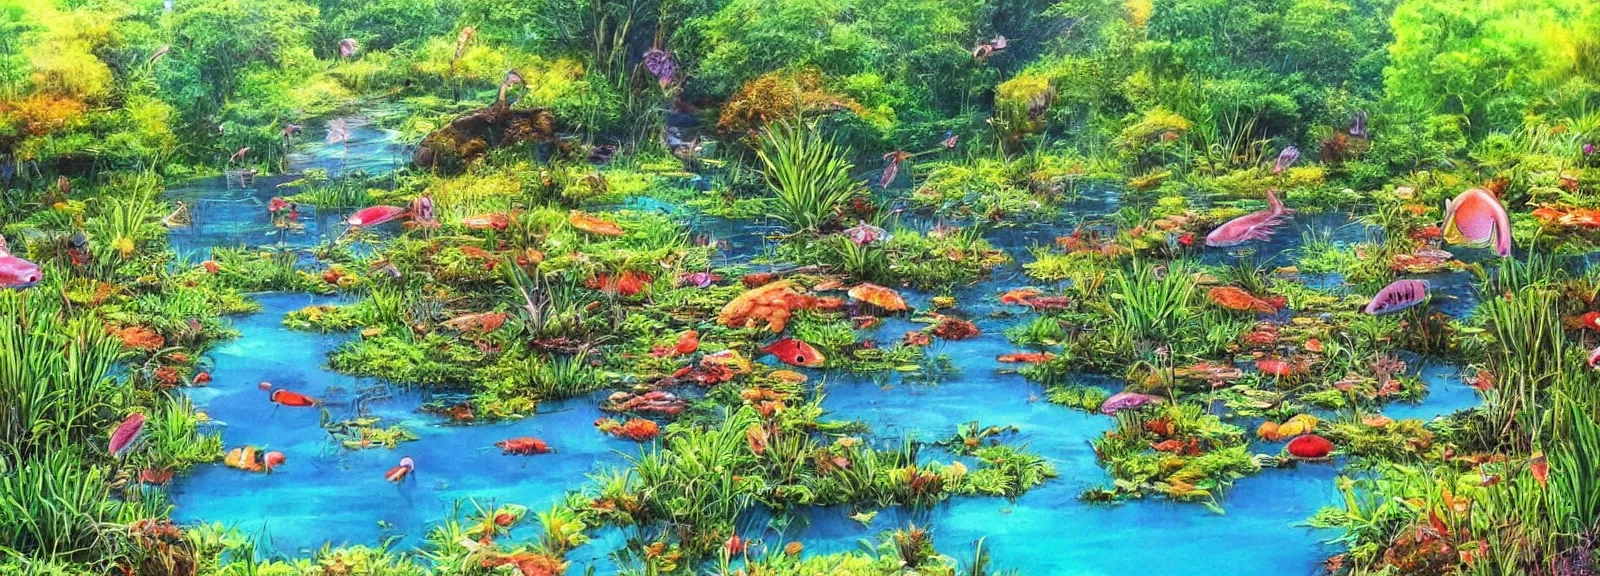 Prompt: romantic colorful nature scene, many ponds, prehistoric fish, lush alien vegetation